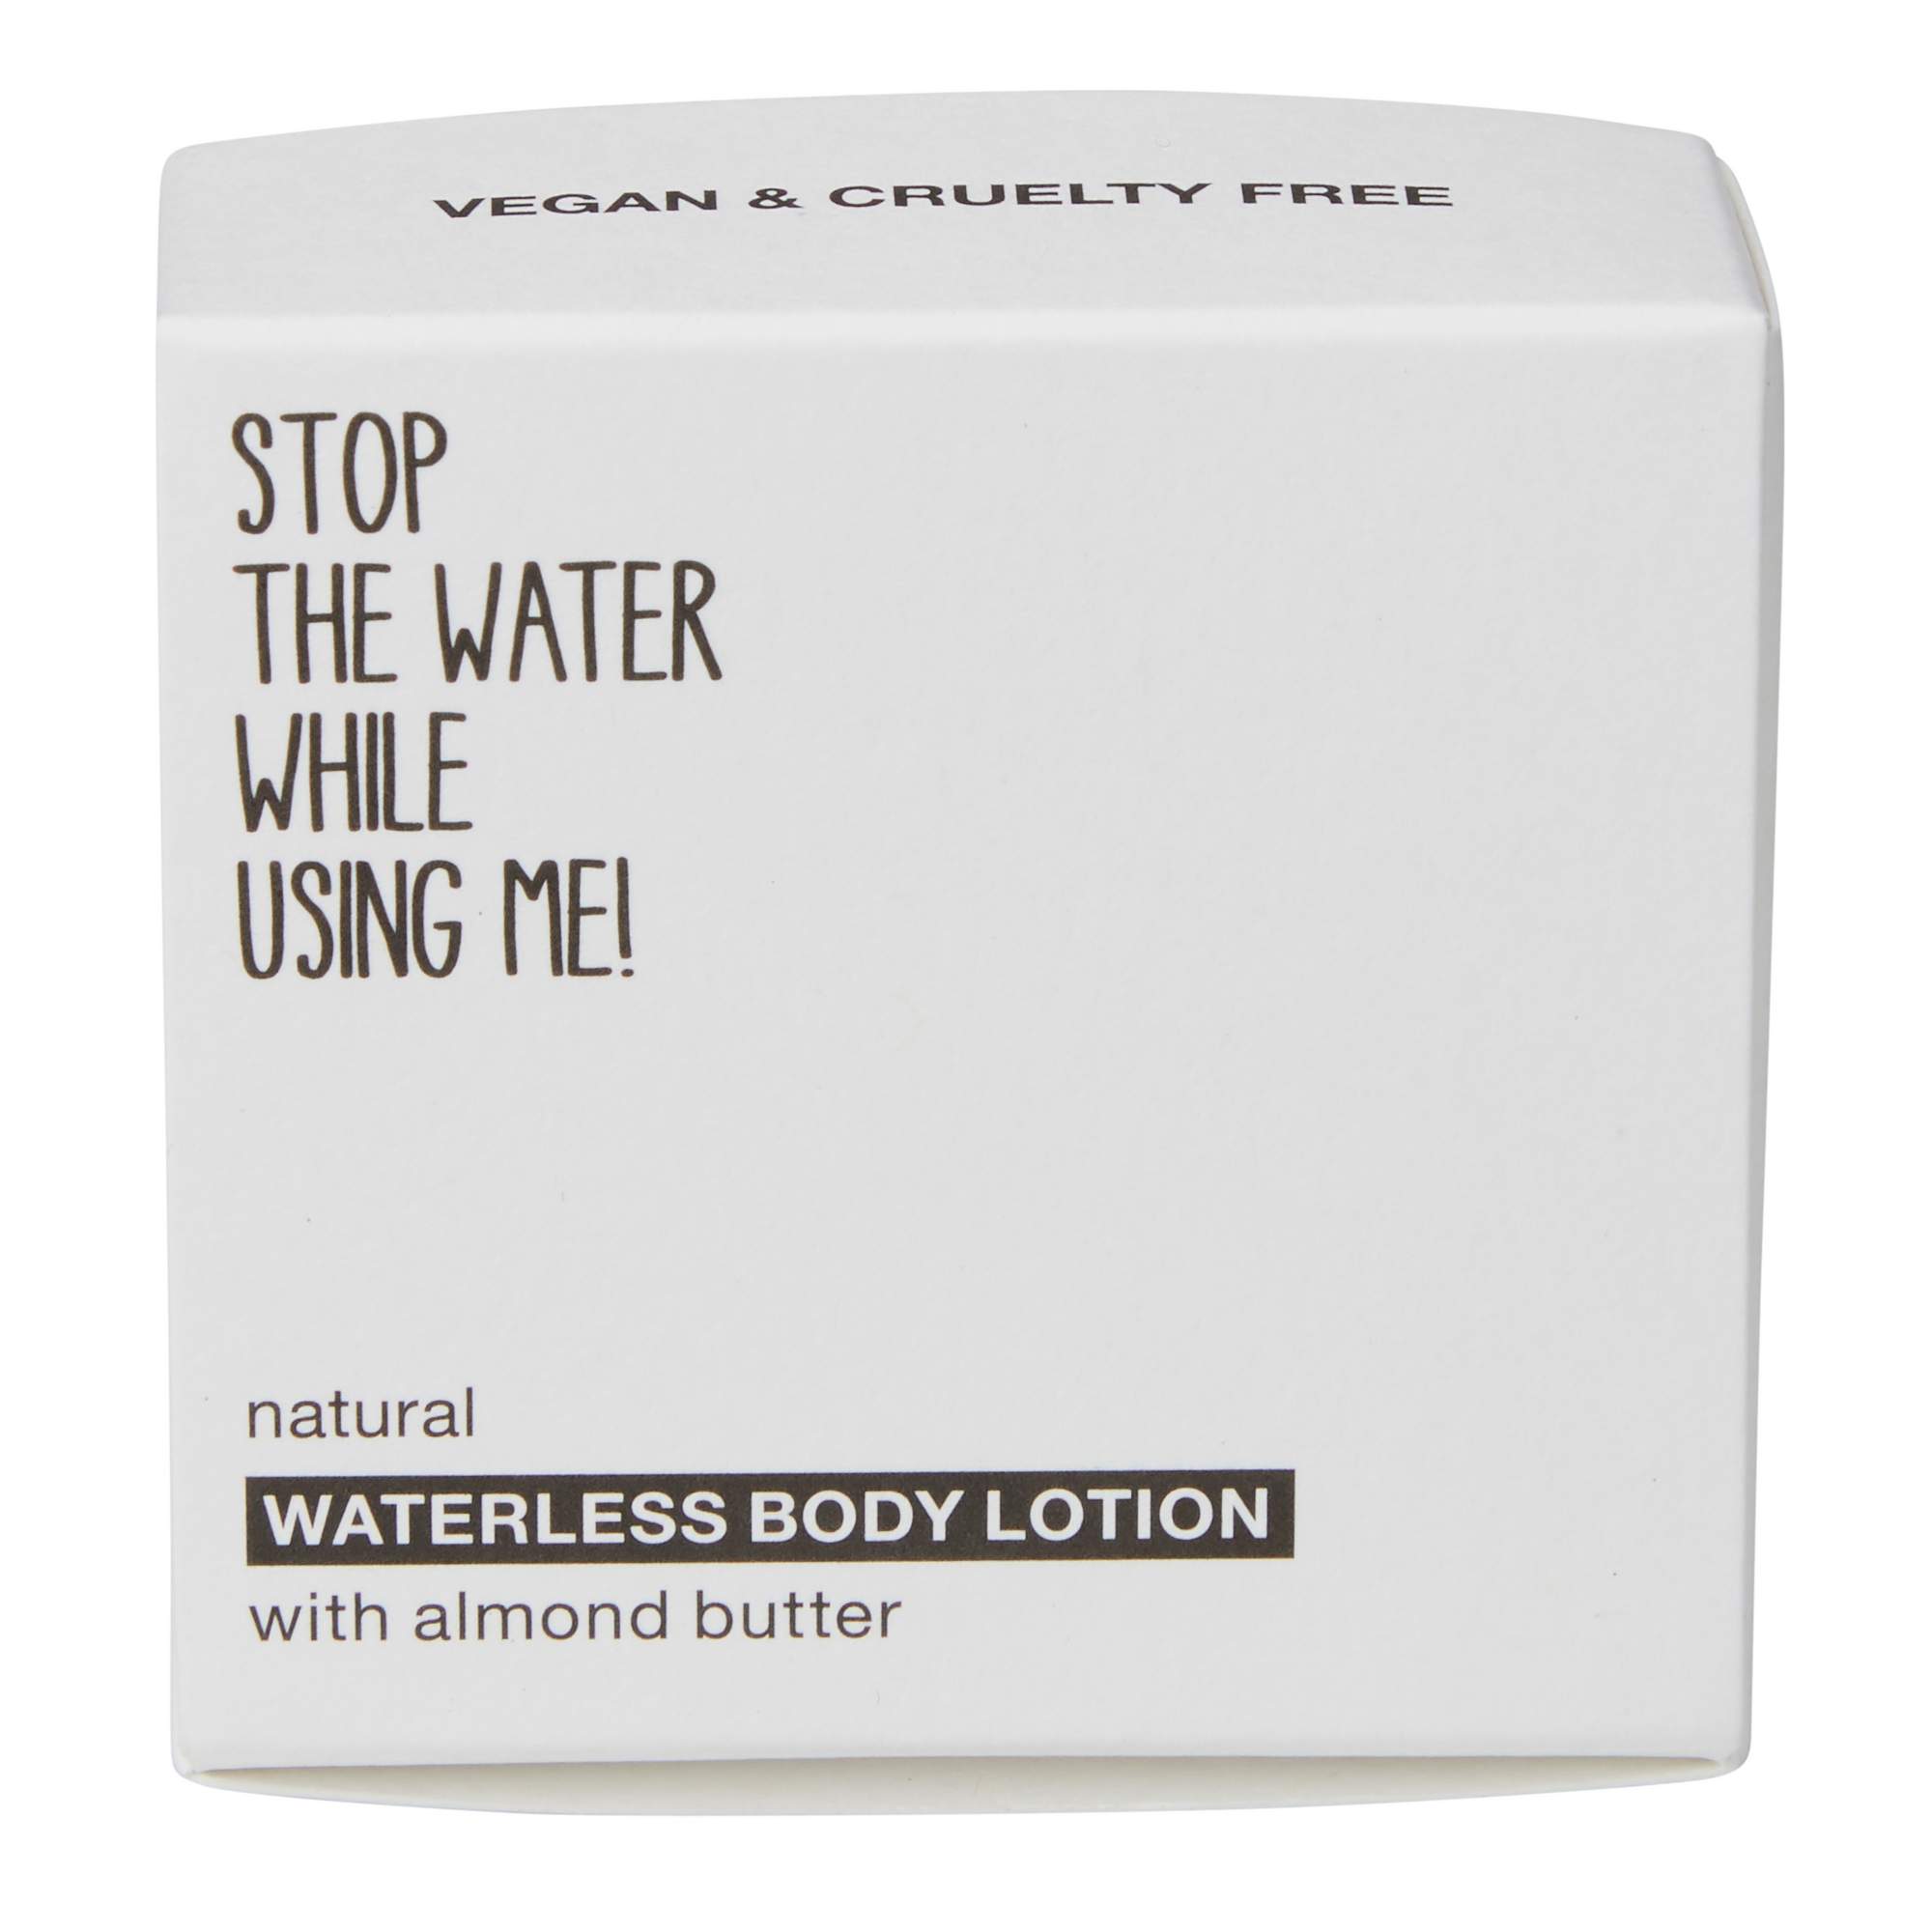 Waterless Body Lotion